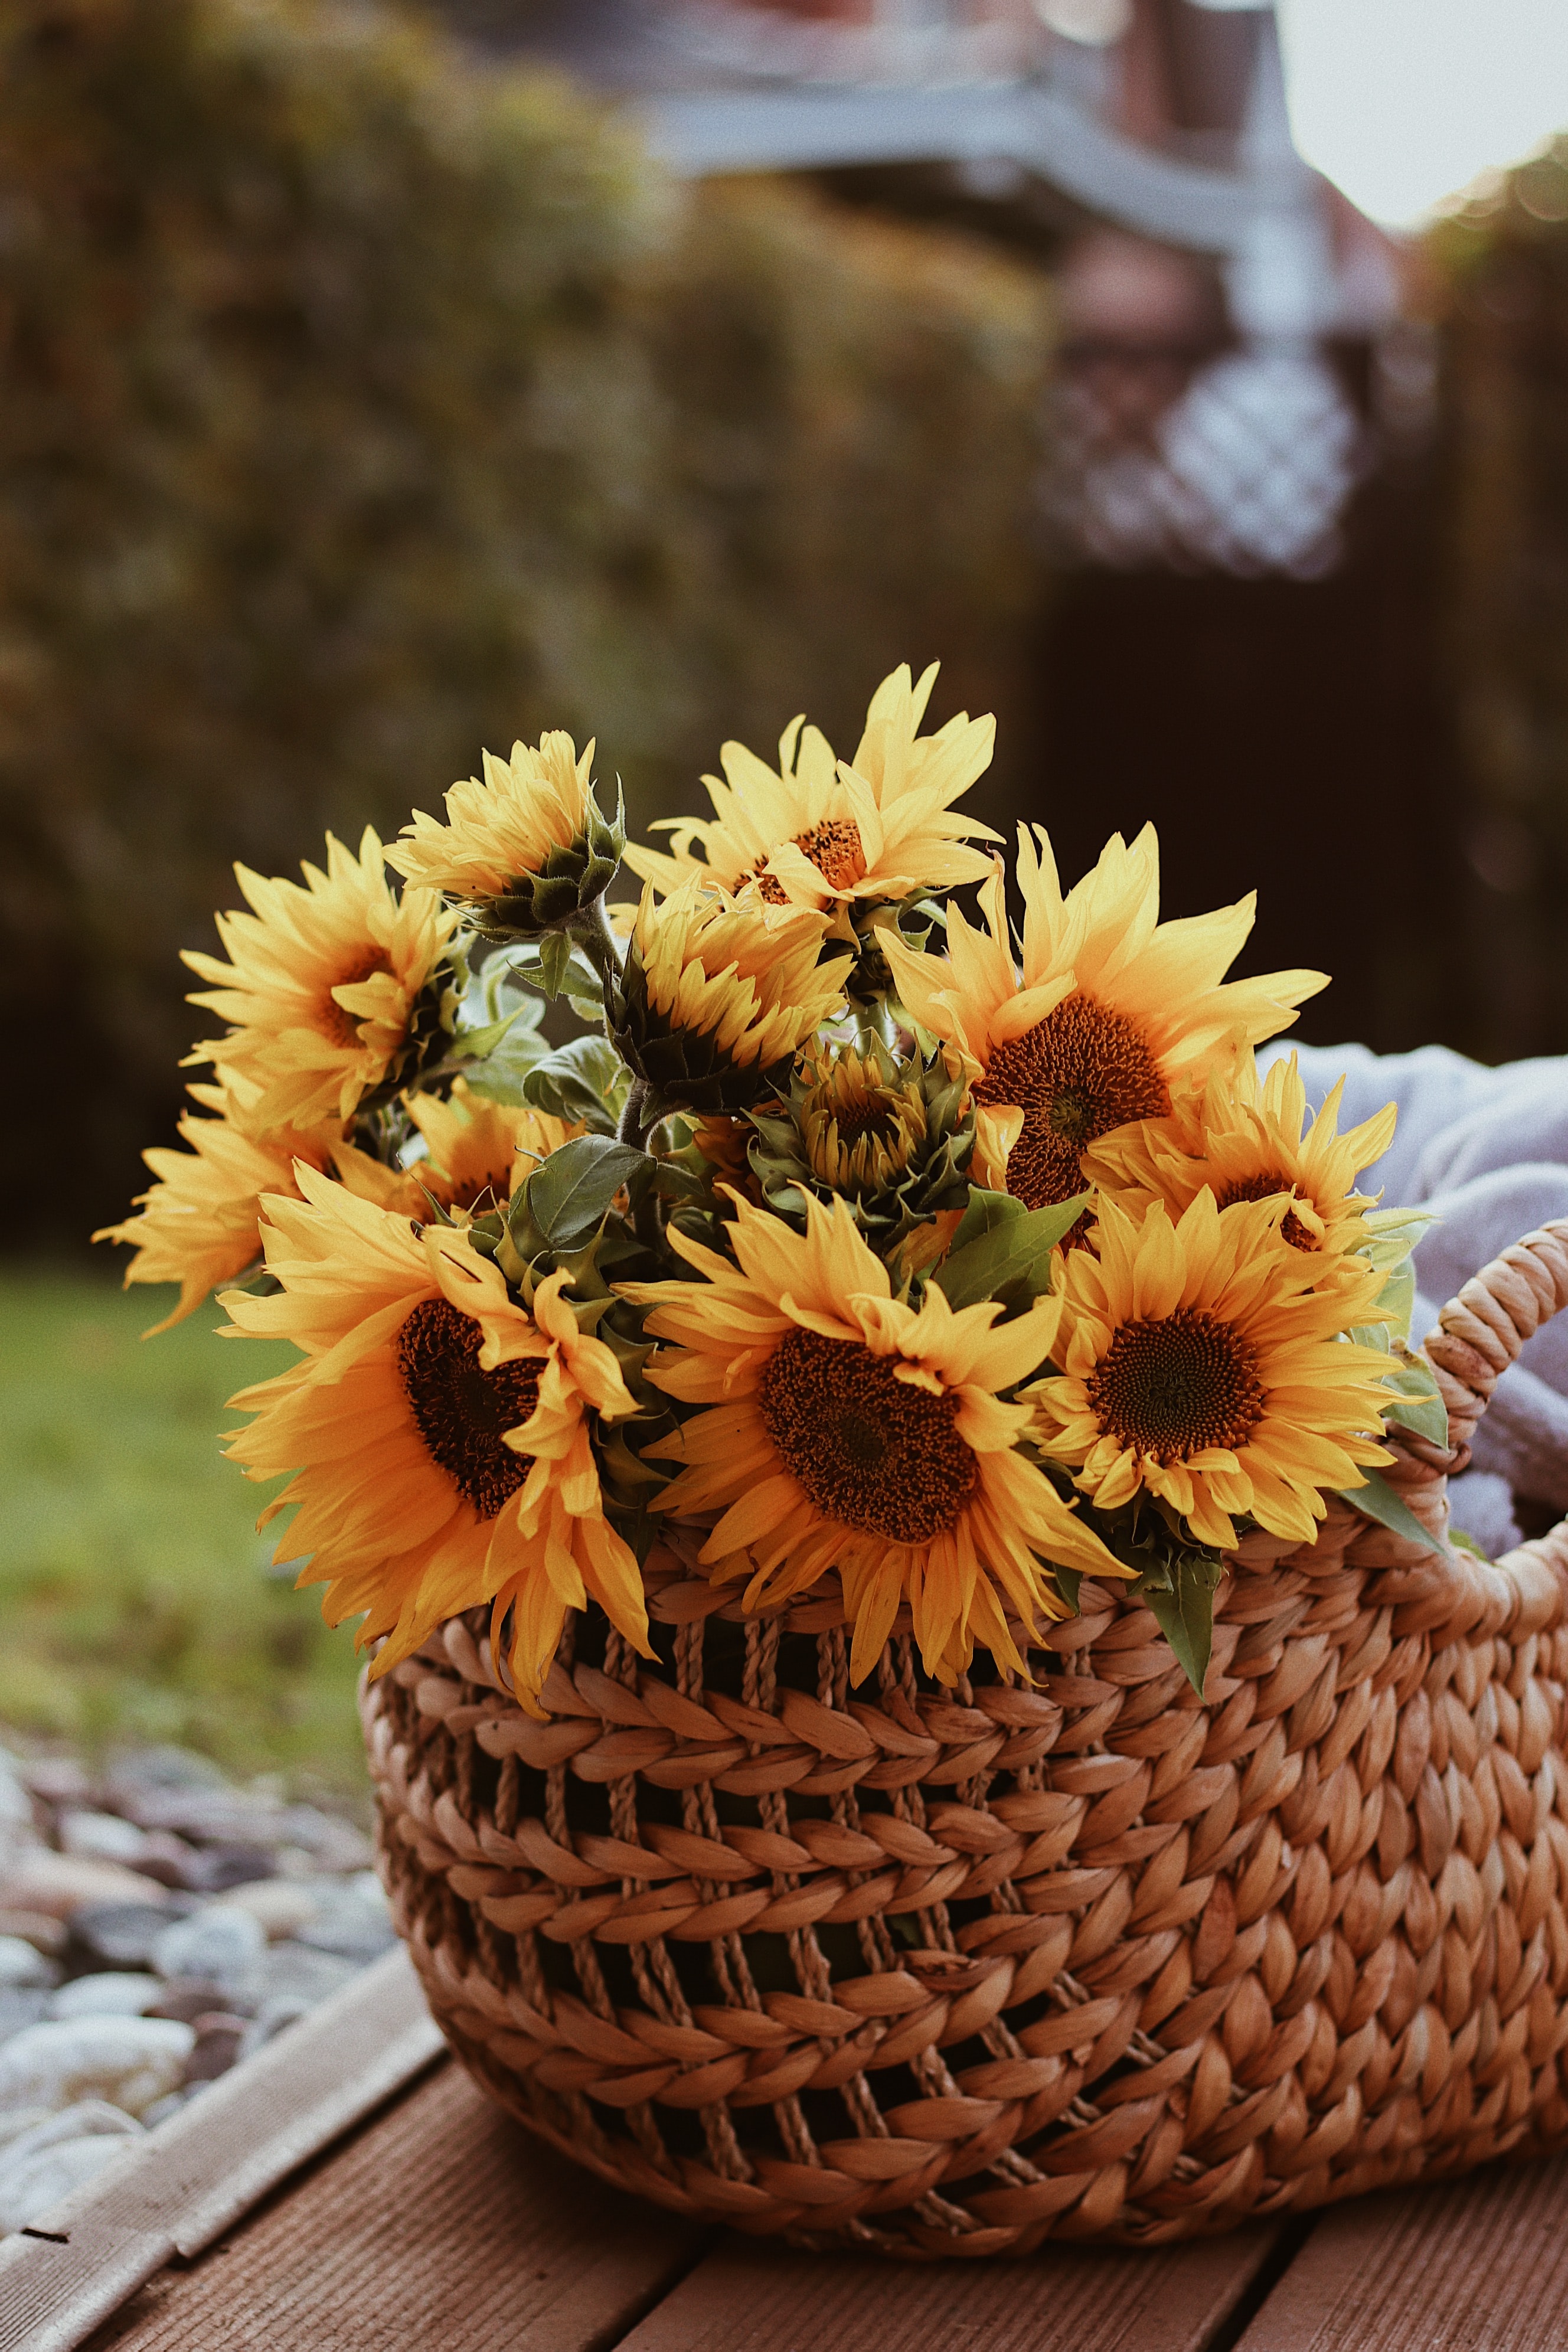 Cool Backgrounds bouquet, flowers, basket Sunflower